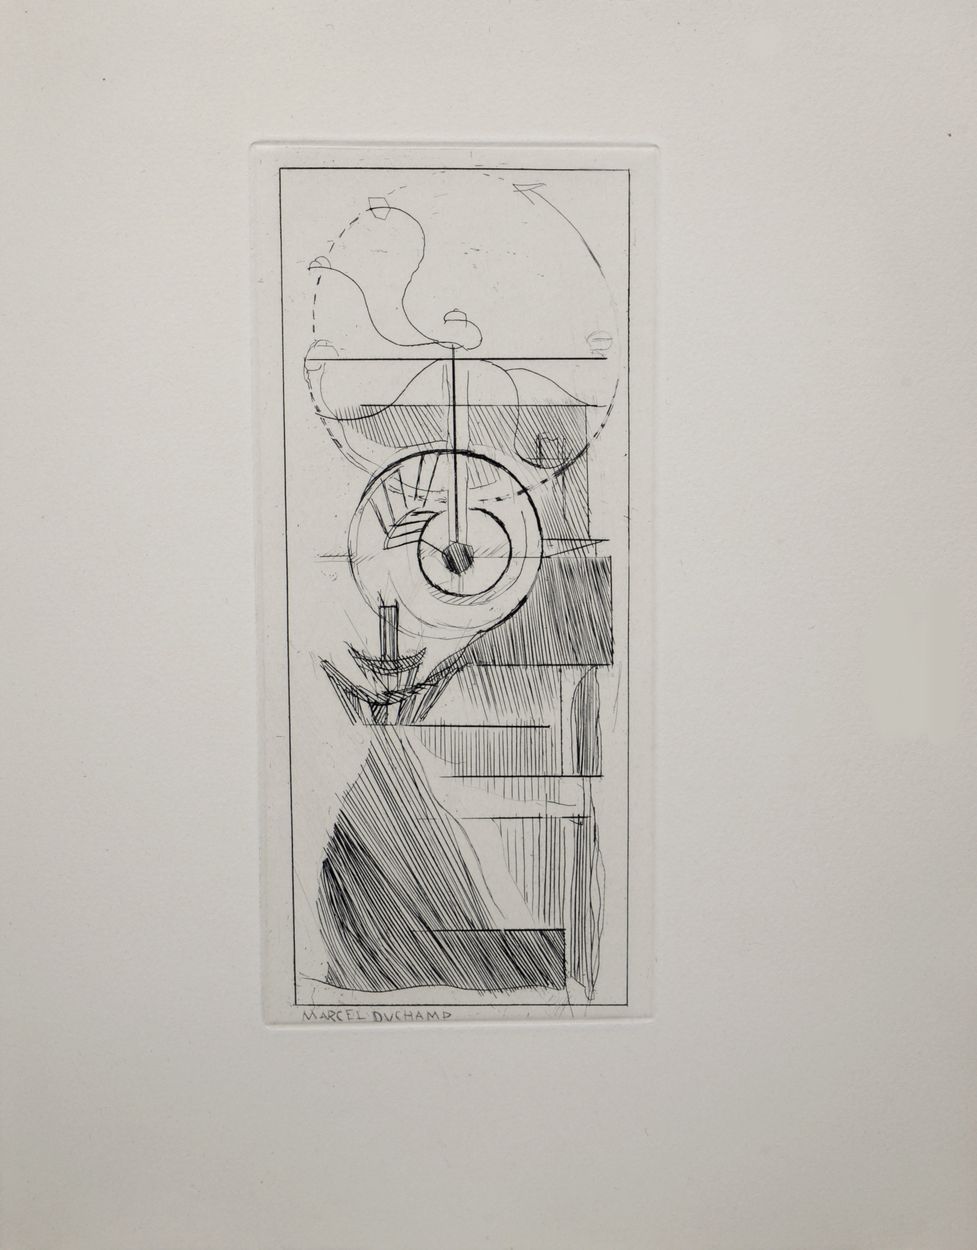 MARCEL DUCHAMP 马塞尔-杜尚 (1887-1968)

咖啡厂，1947年

拉纳纸上的原始蚀刻版画 左下角签名

尺寸：+纸张尺寸：25.5 x&hellip;